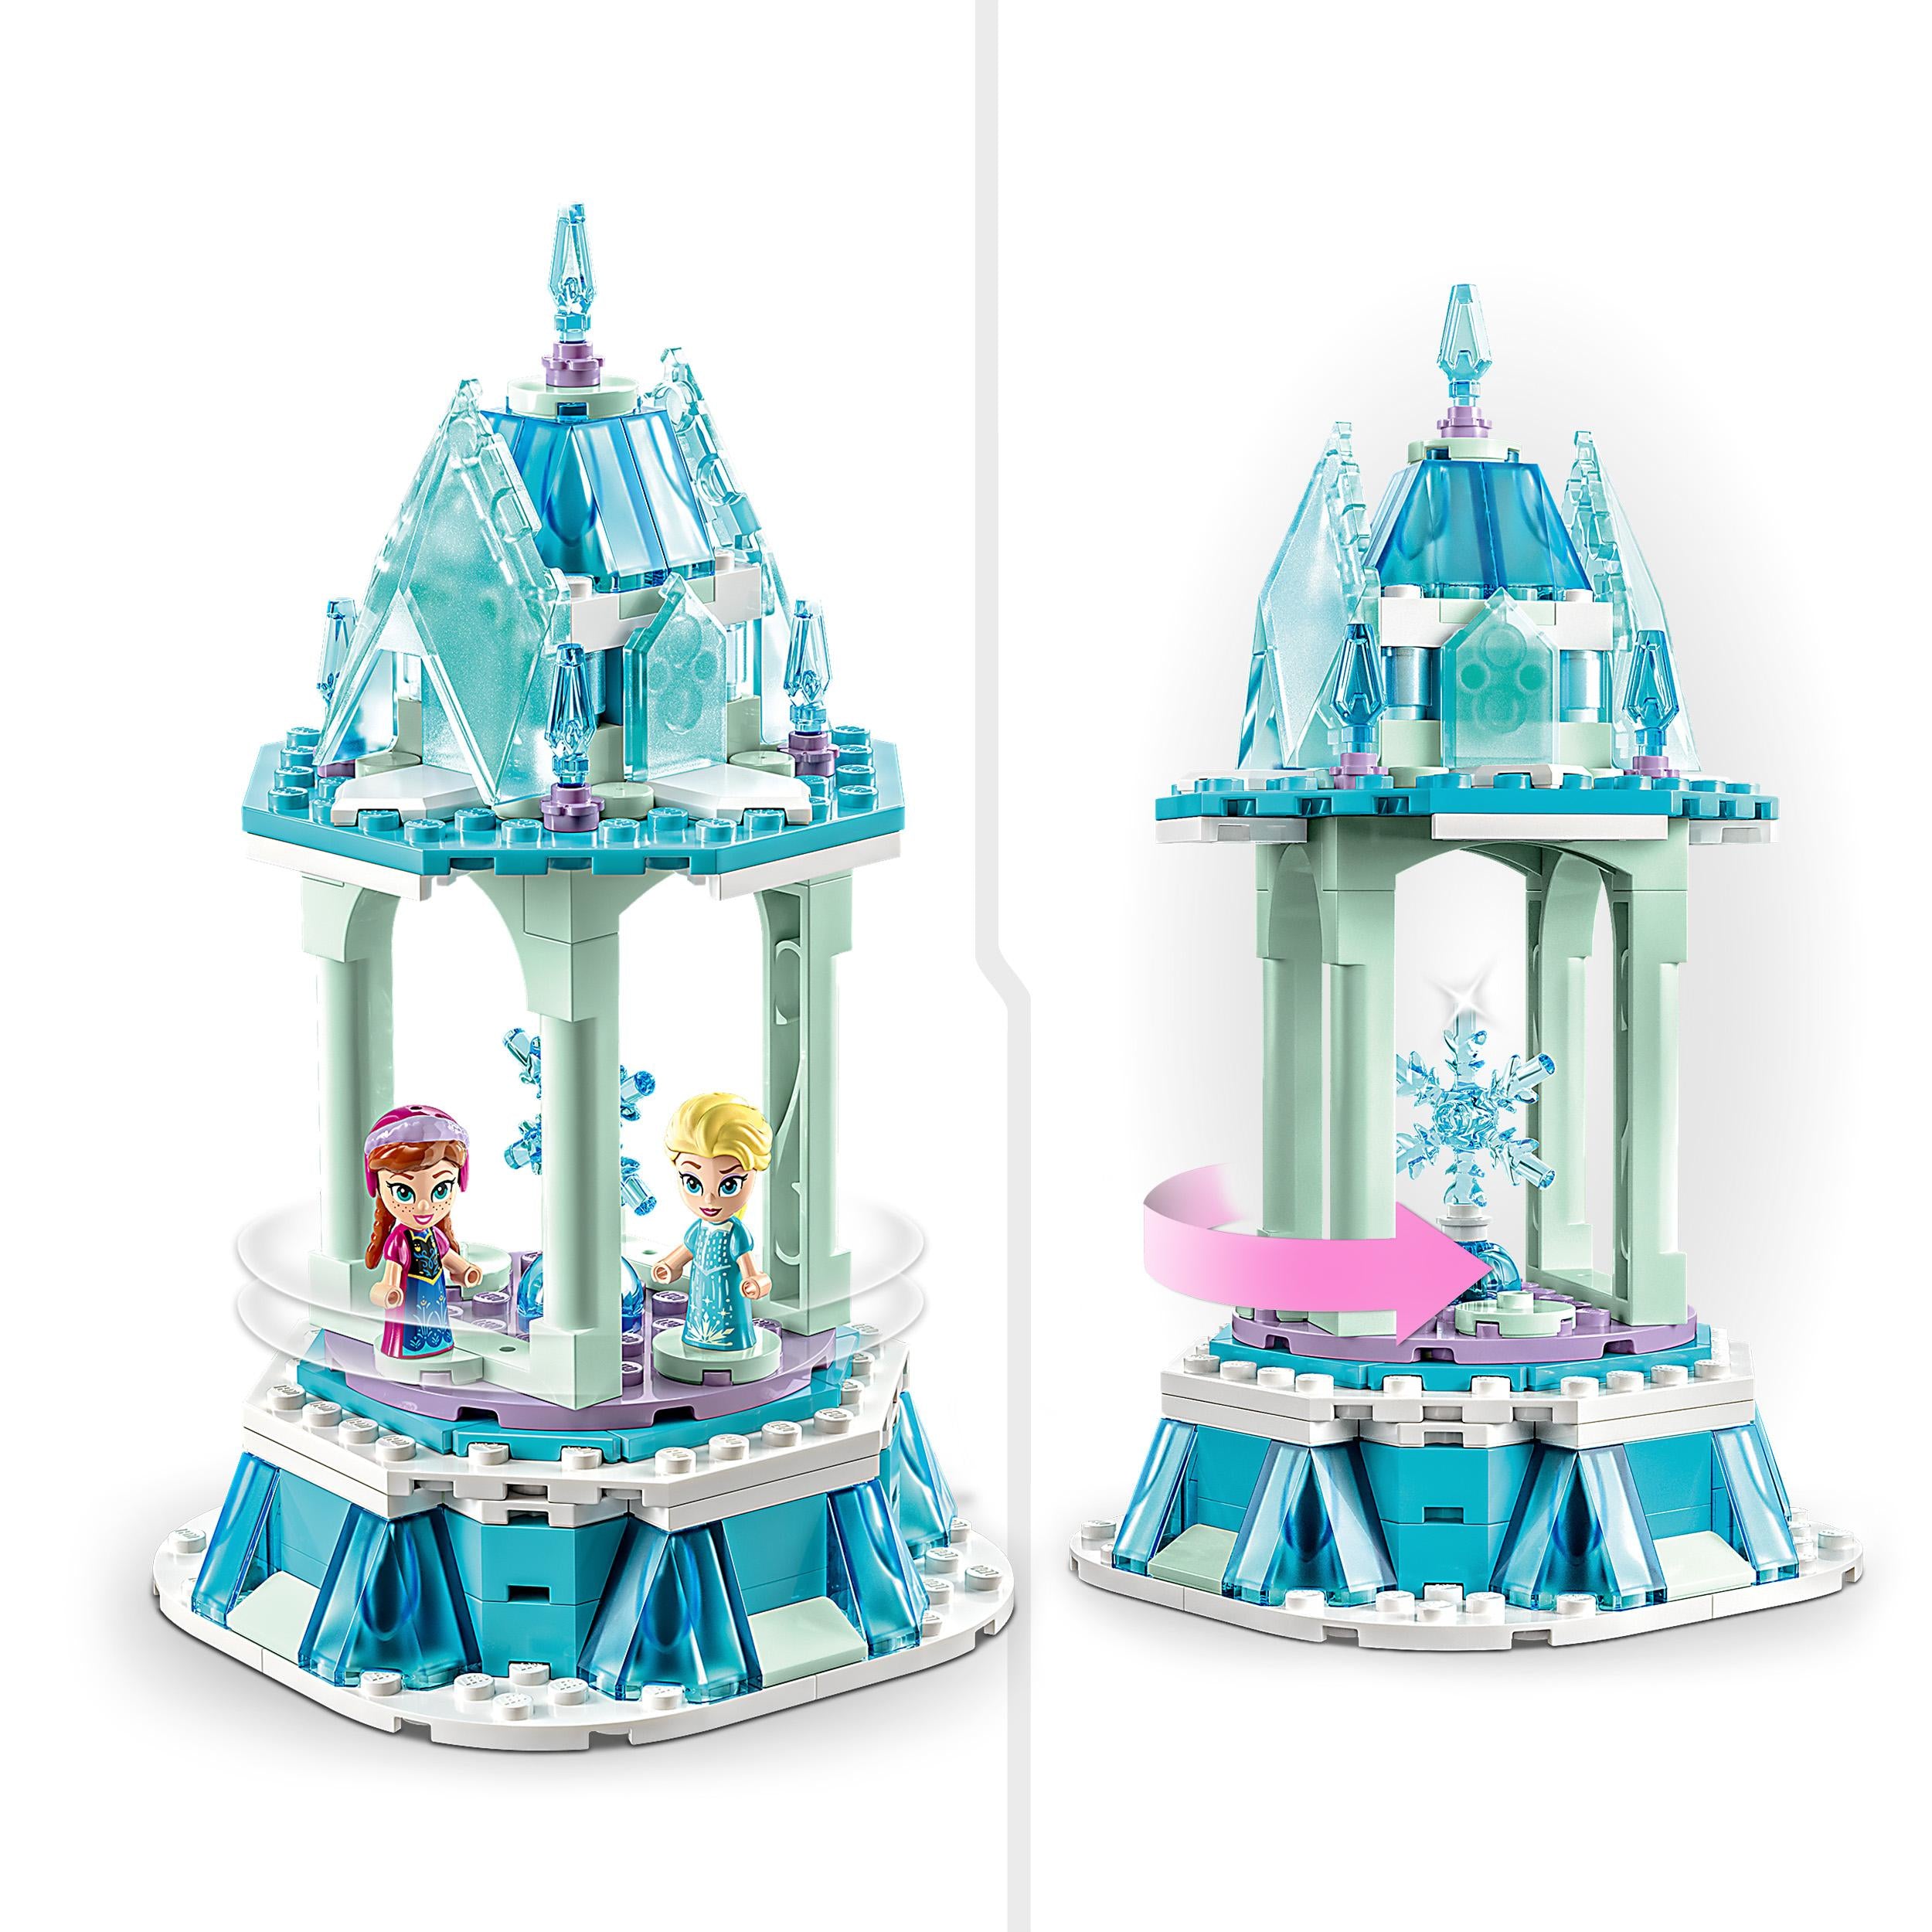 43218 - LEGO Disney Princess - La giostra magica di Anna ed Elsa